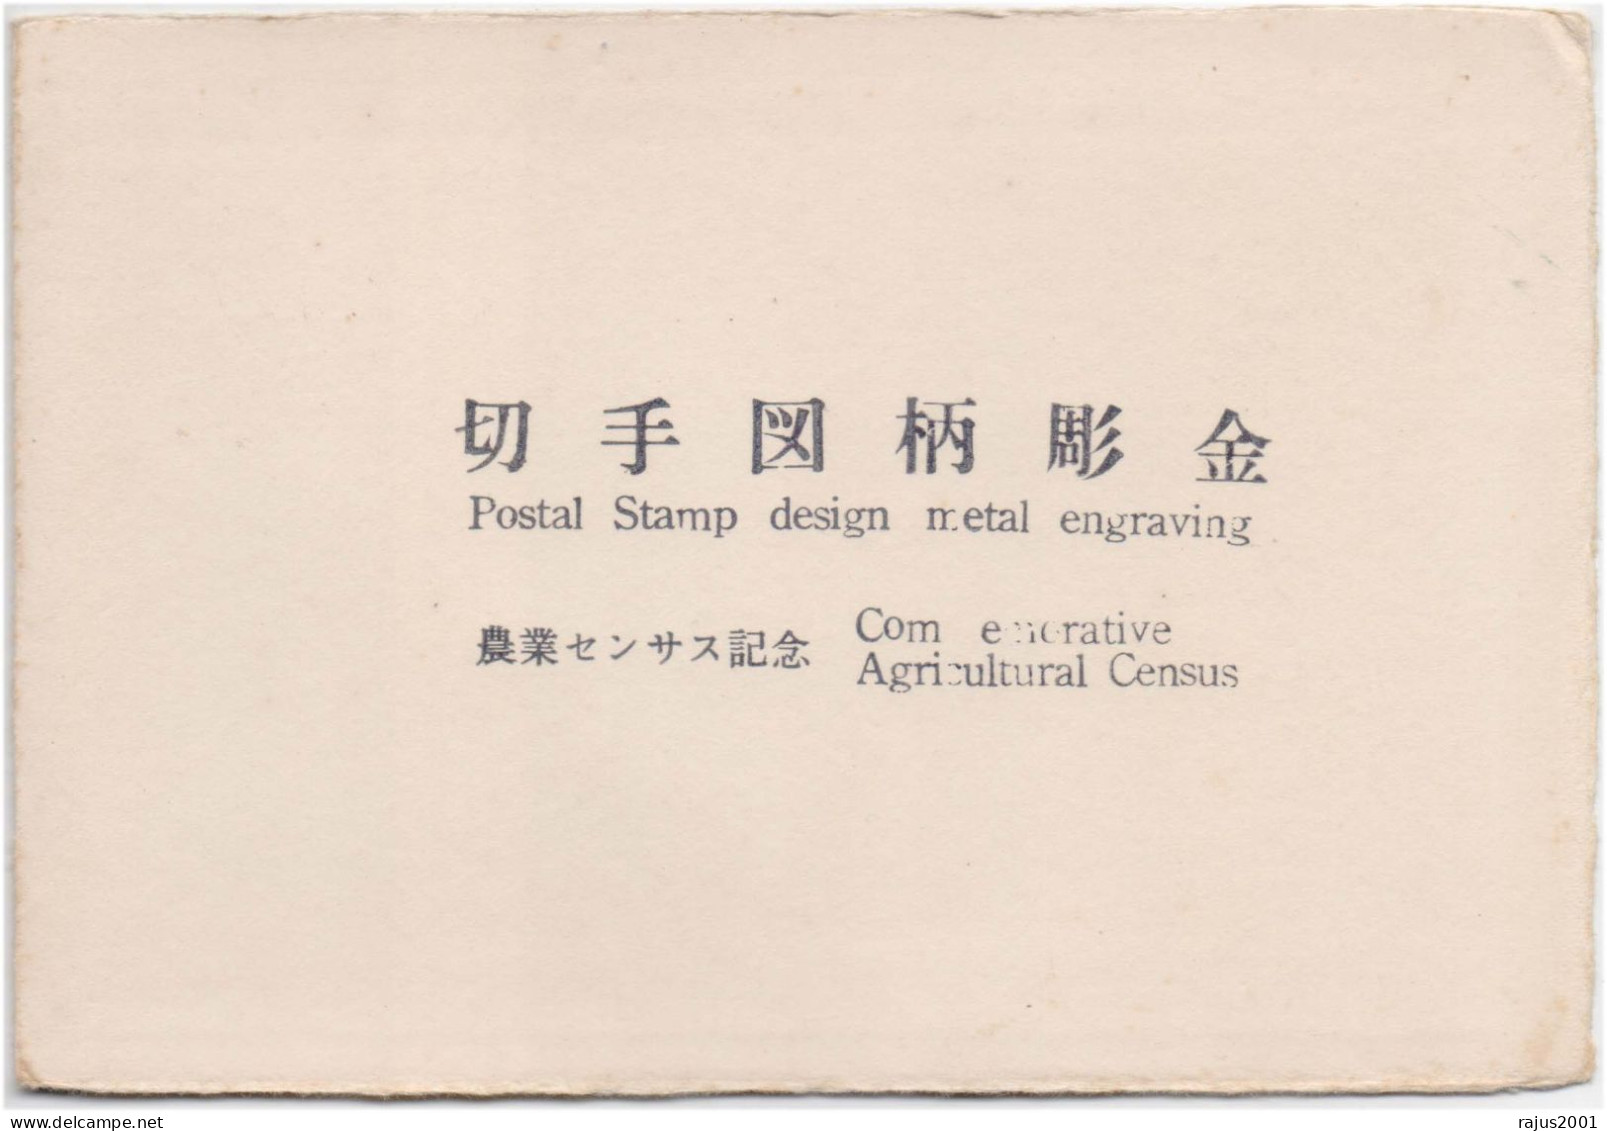 Agricultural Census, Pineapple, Sugar Cane, Beautiful Metal Engraving UNUSUAL Metallic Metal Cachet RYUKYU Folder - Agriculture